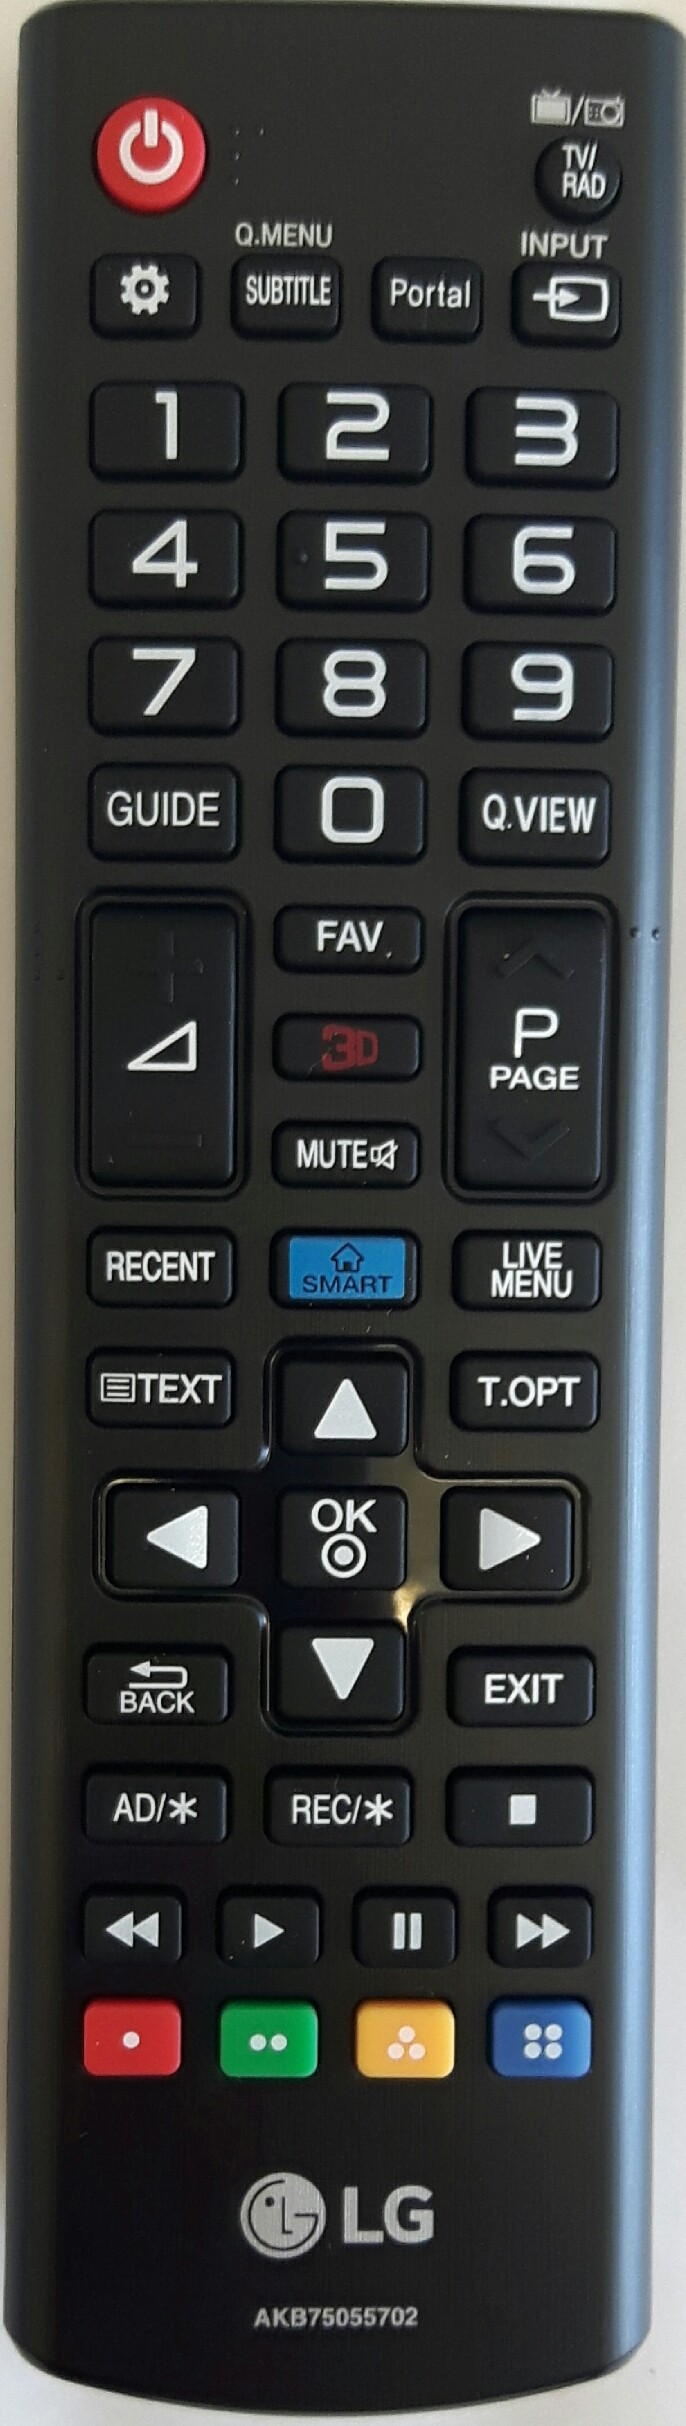 LG 22LH2000 Remote Control Original